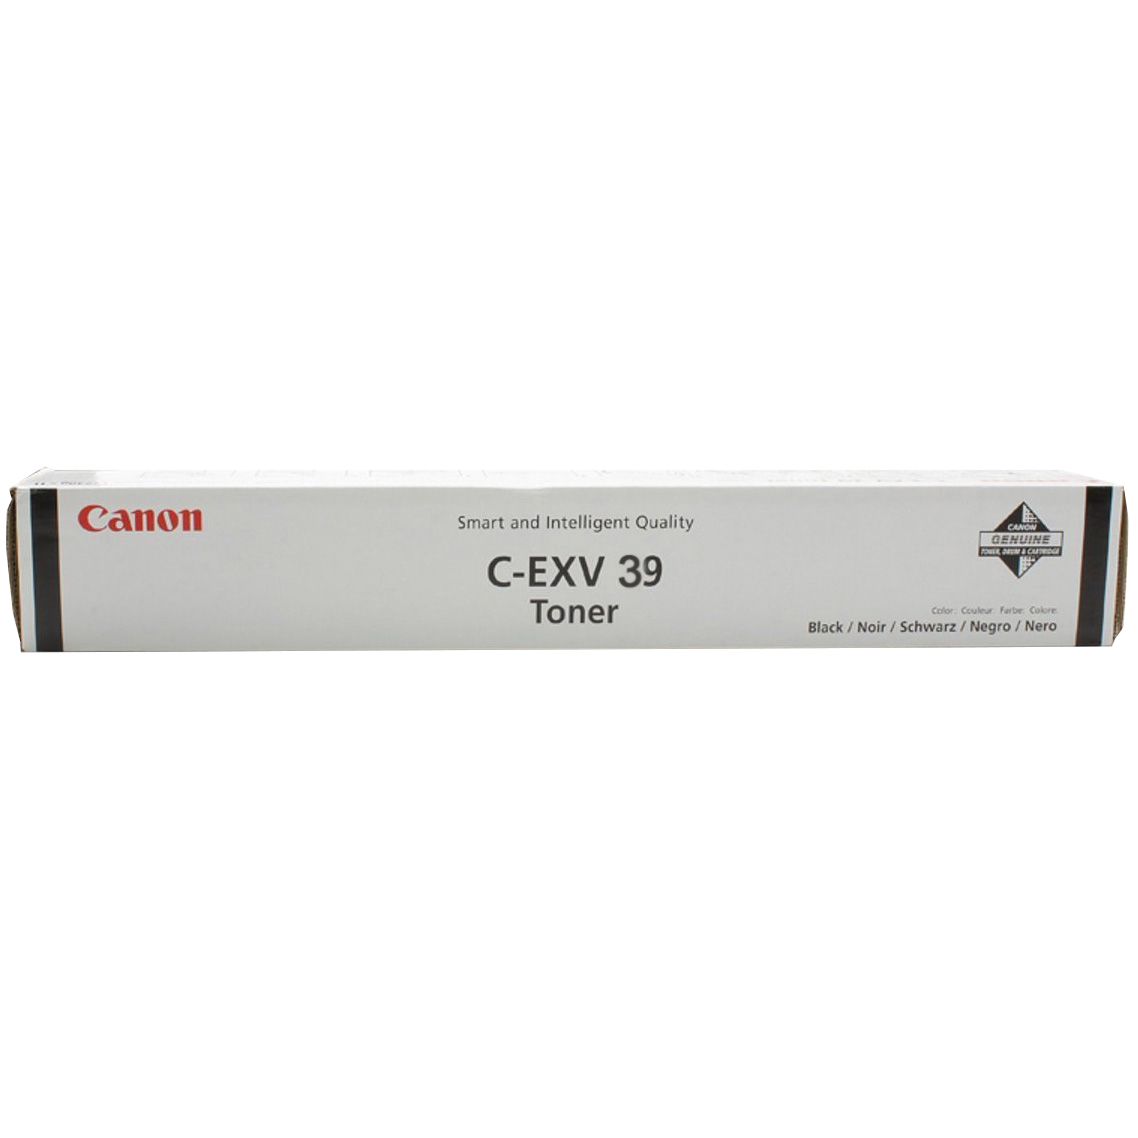 Canon C-EXV39 Toner Cartridge Black